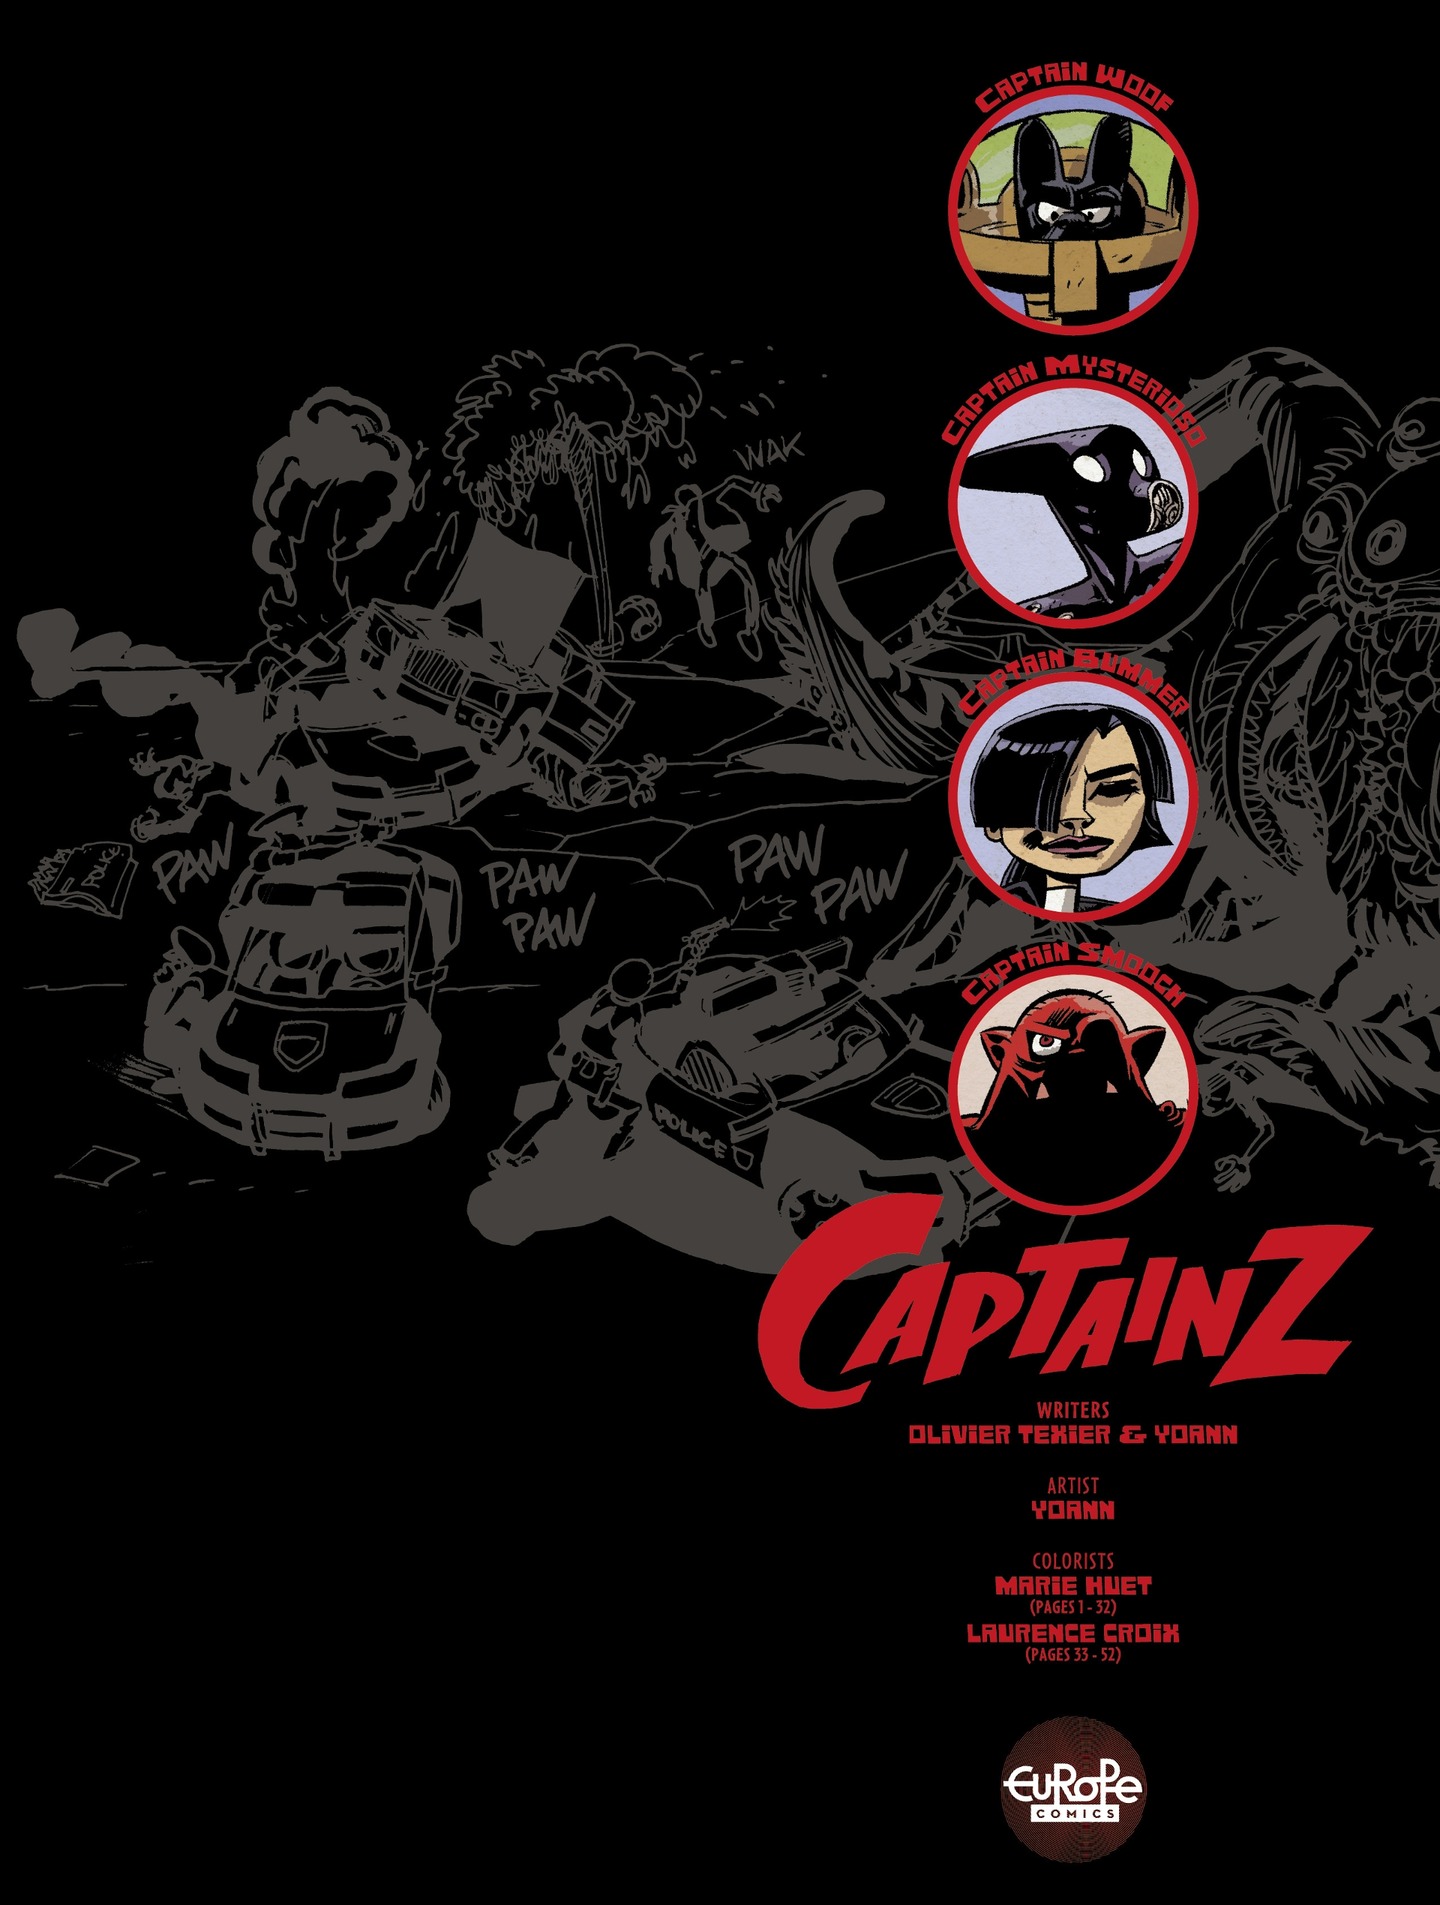 Read online Captainz comic -  Issue # Full - 2